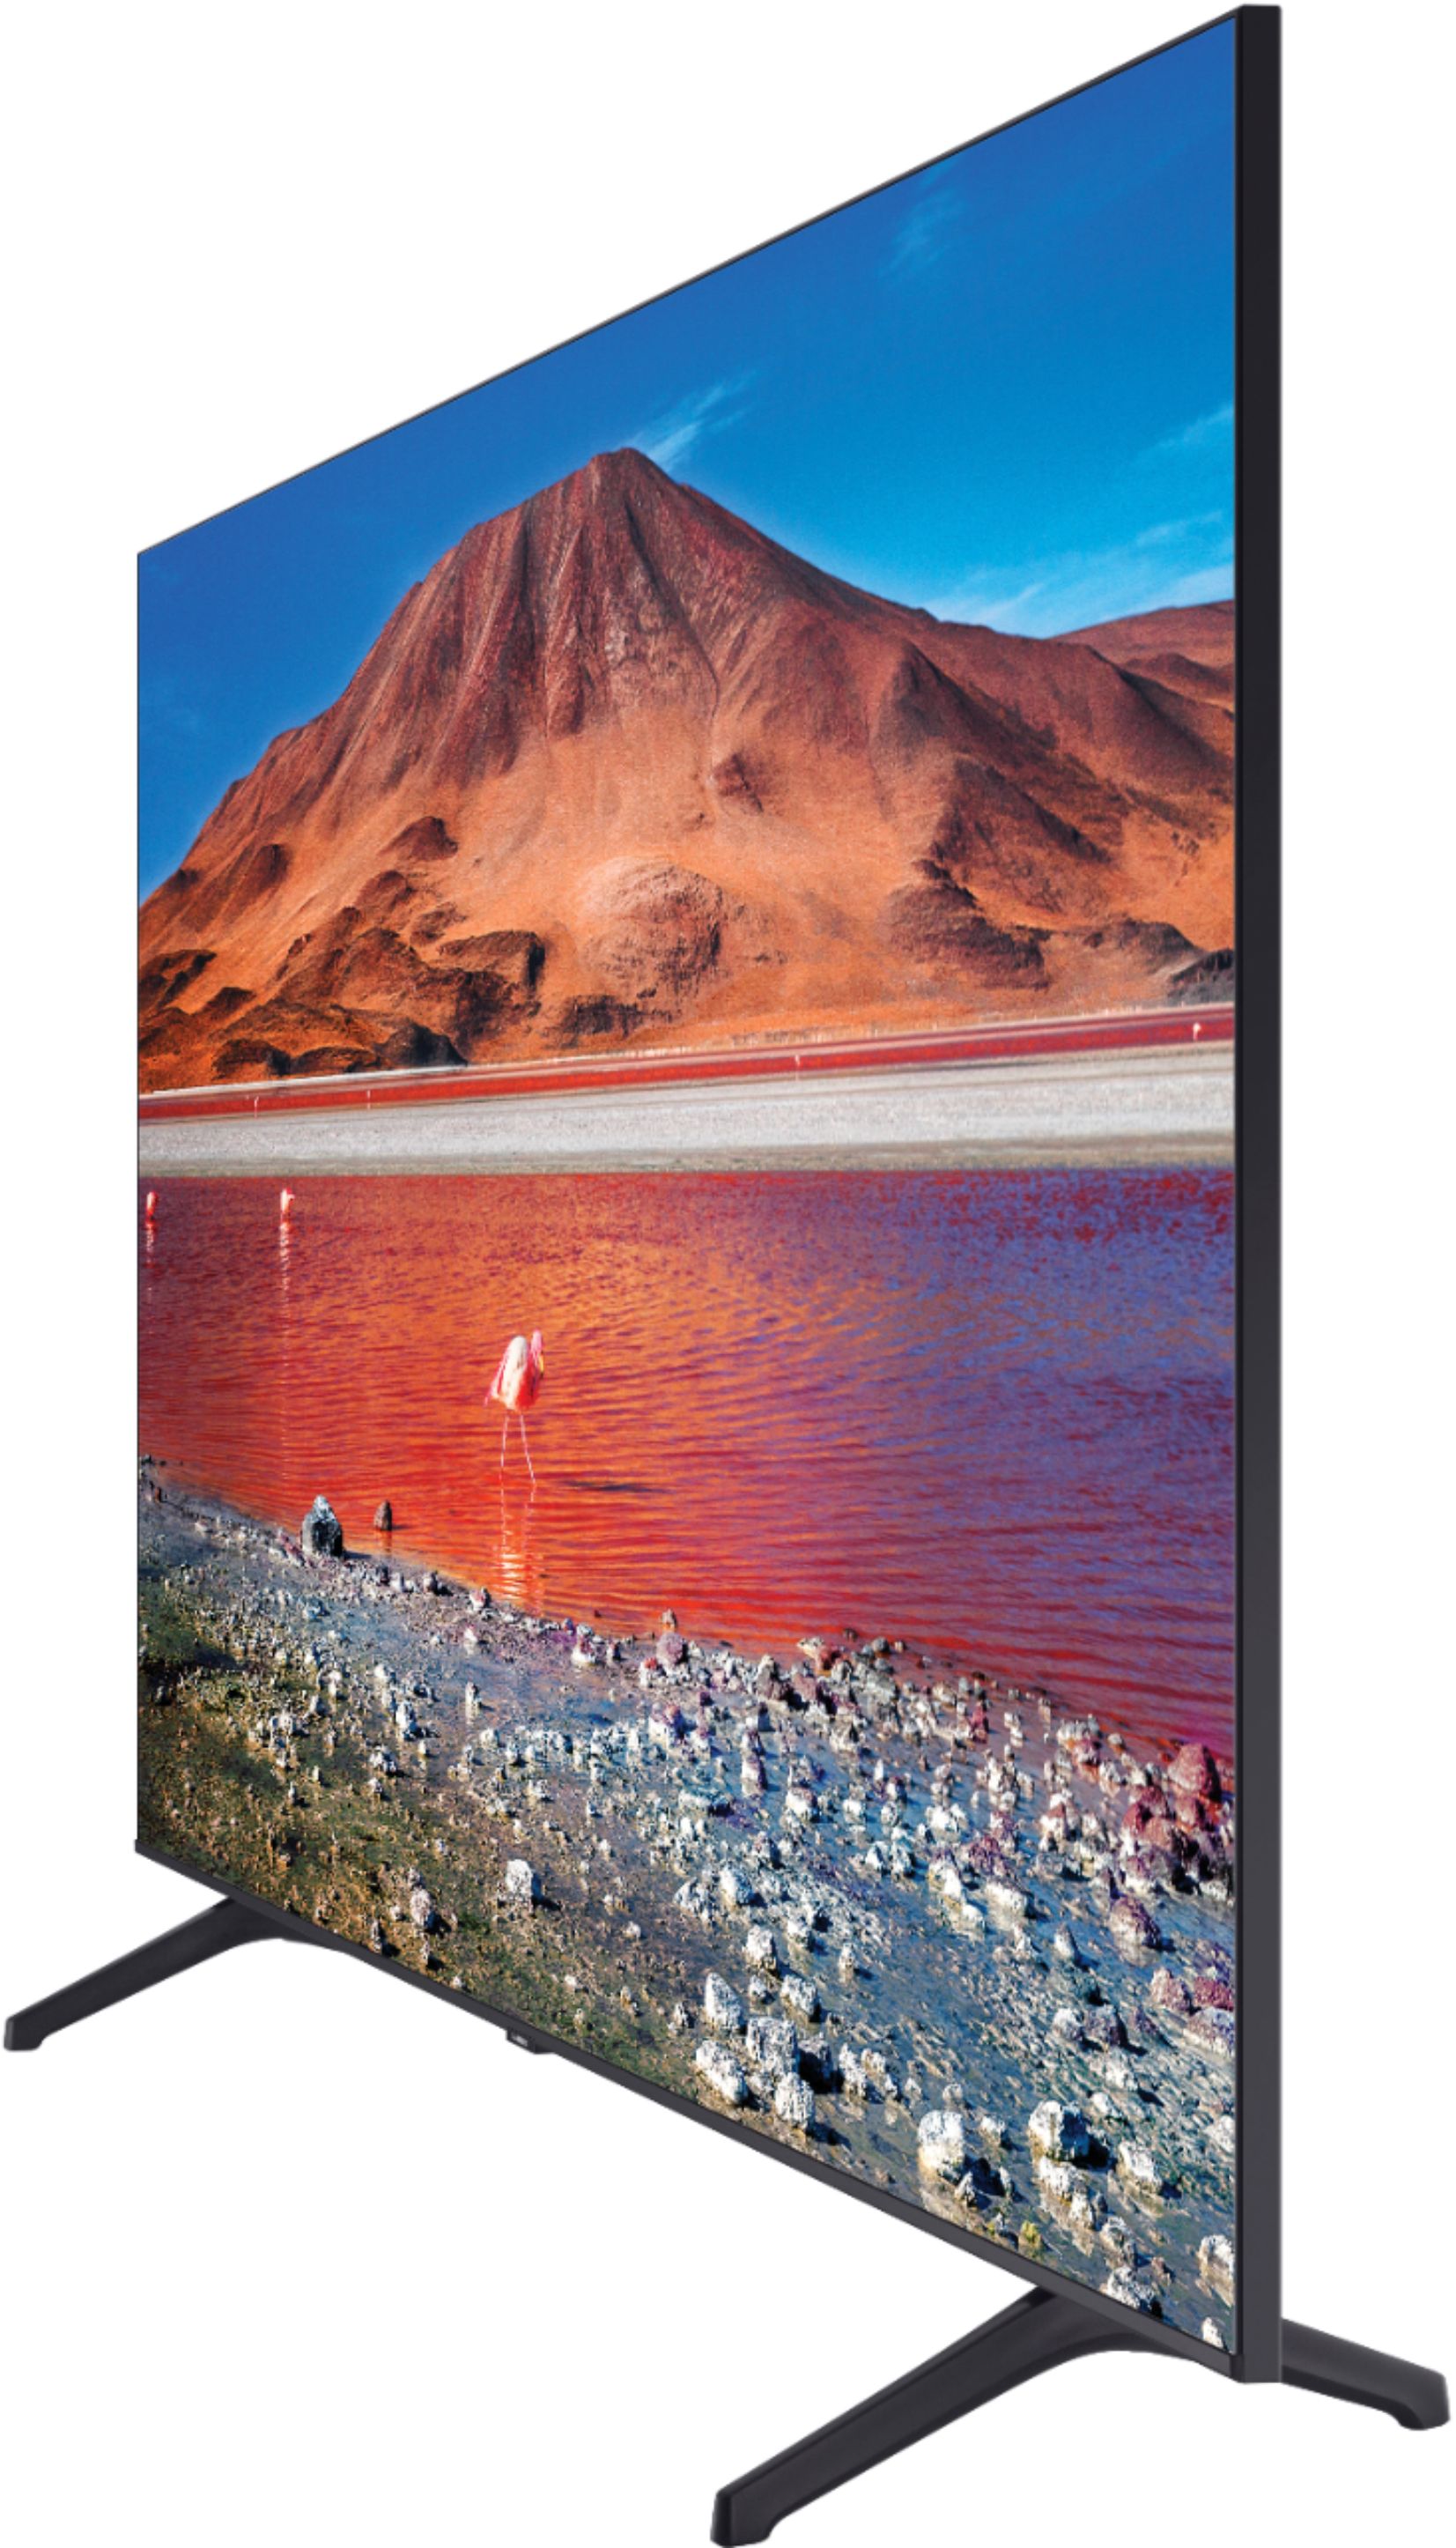 Samsung 43" Class 7 4K Smart Tizen TV UN43TU7000FXZA - Best Buy